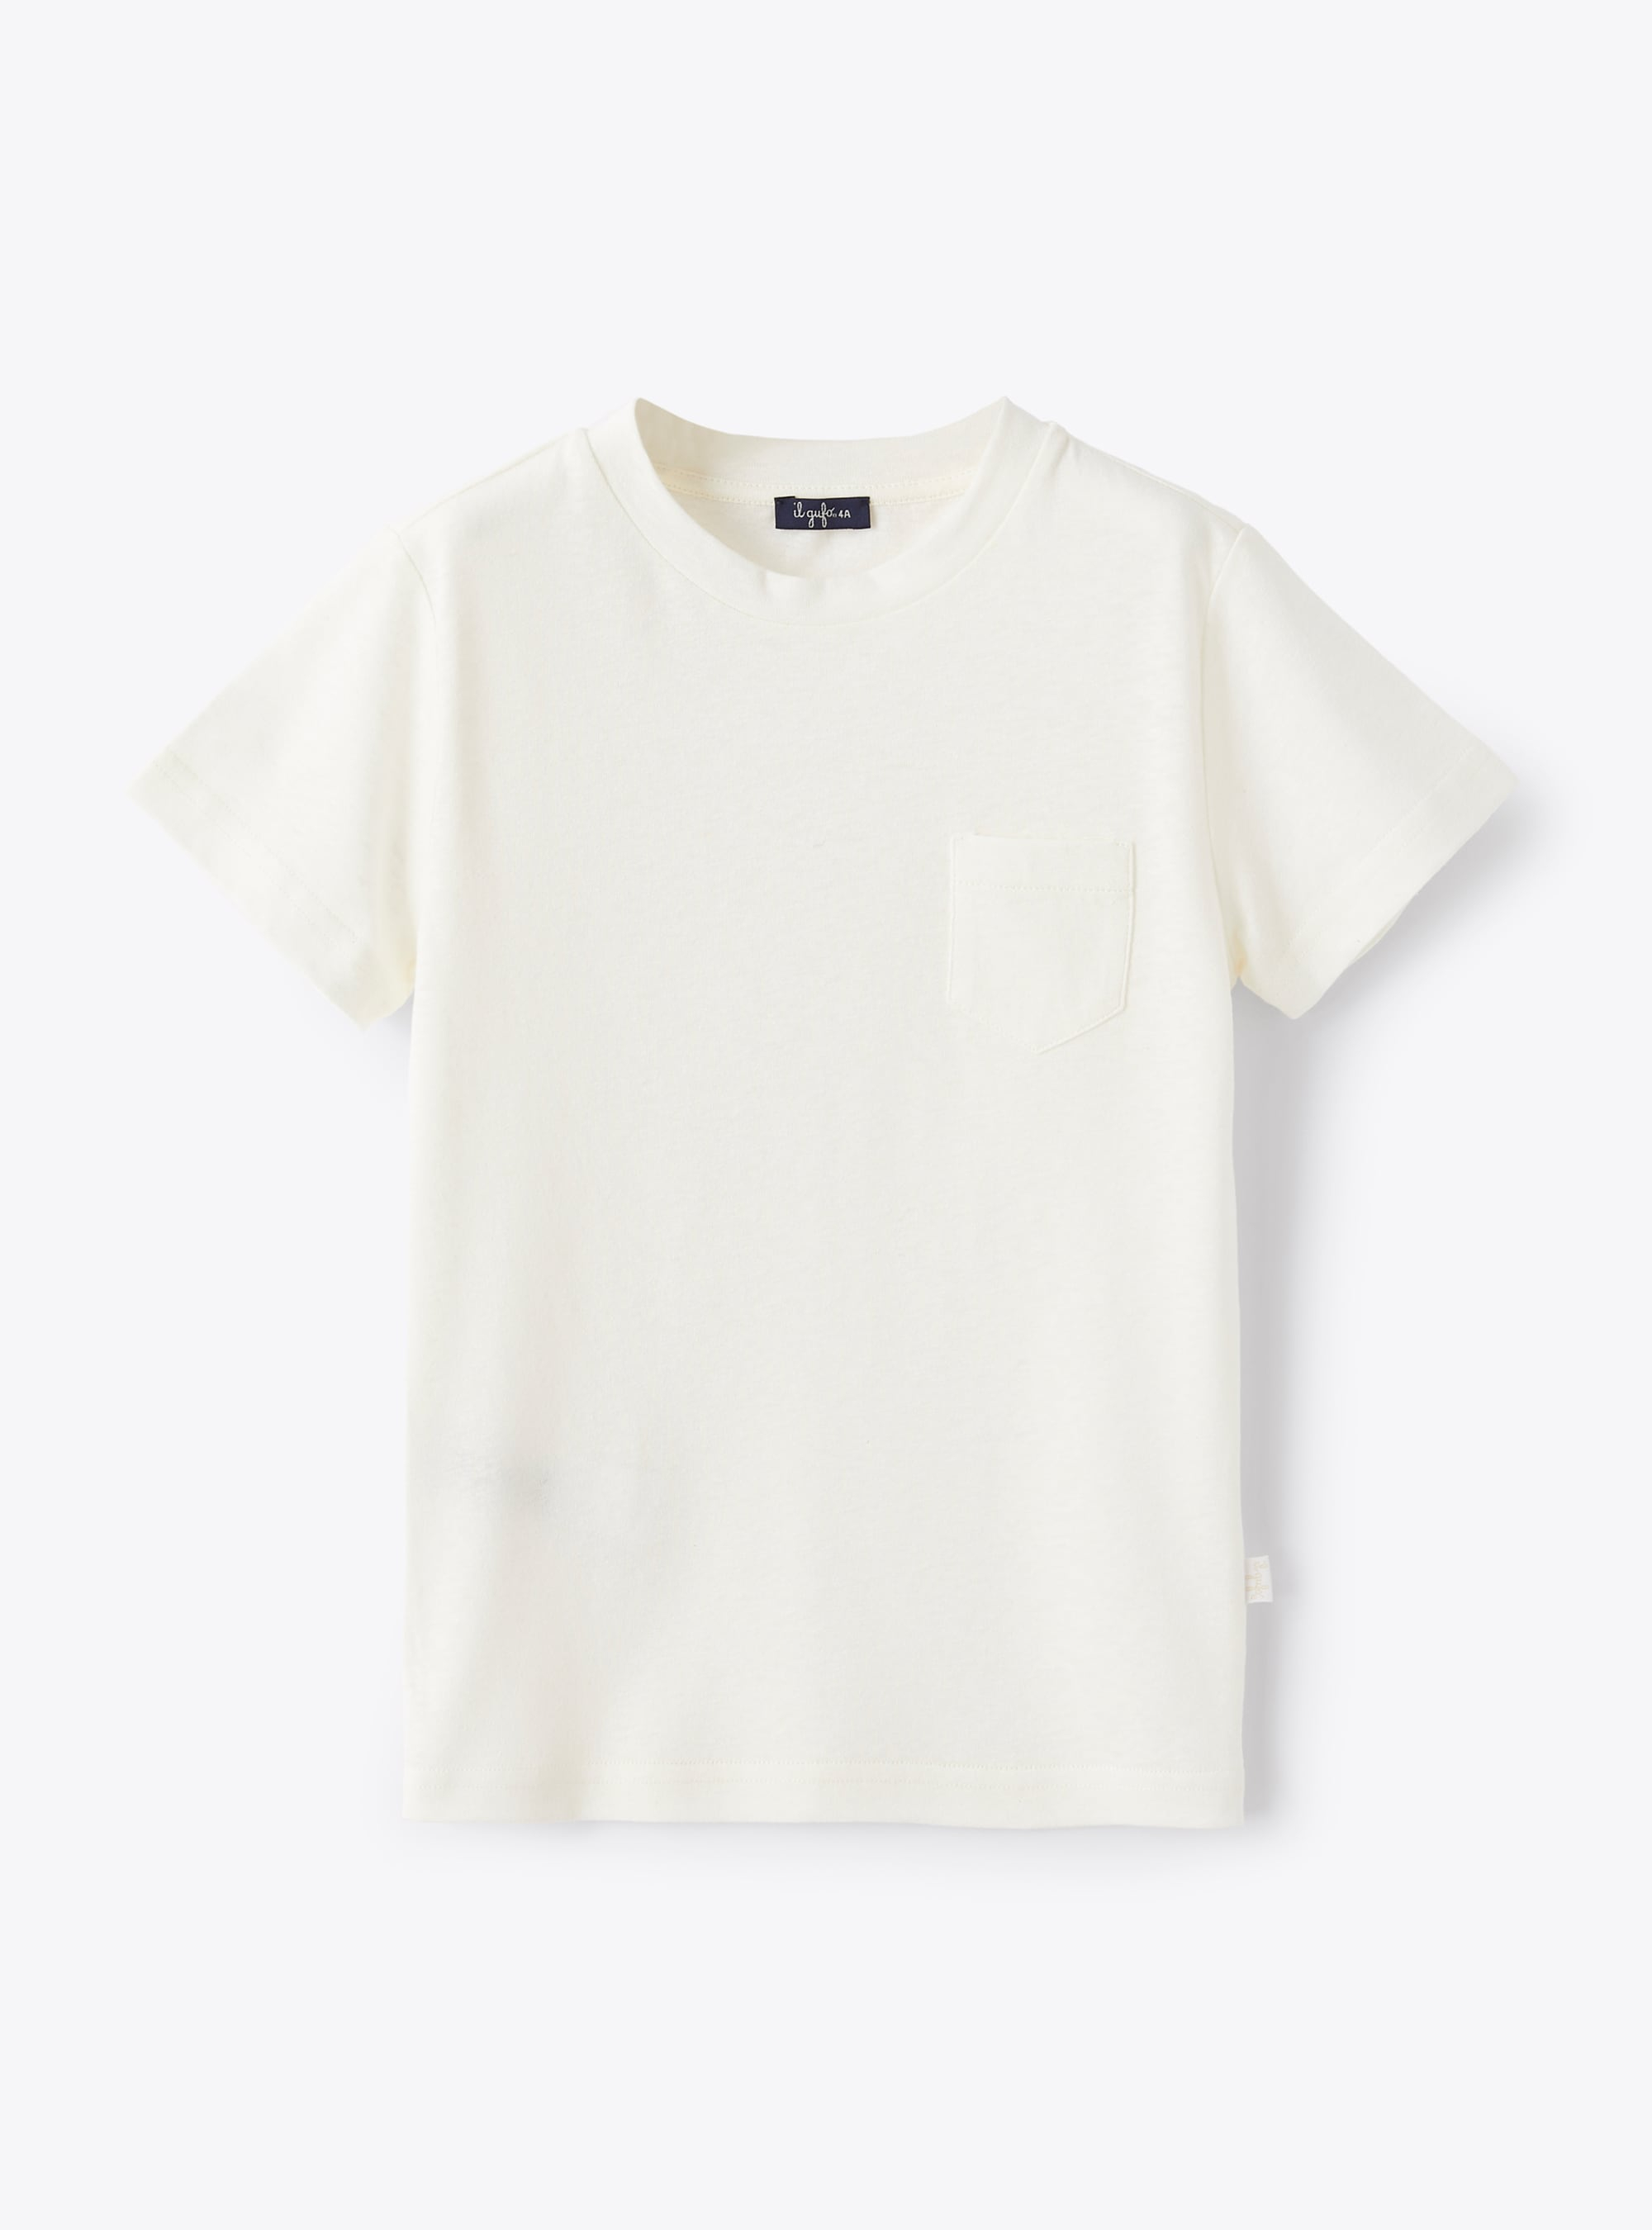 White t-shirt in cotton and linen - White | Il Gufo